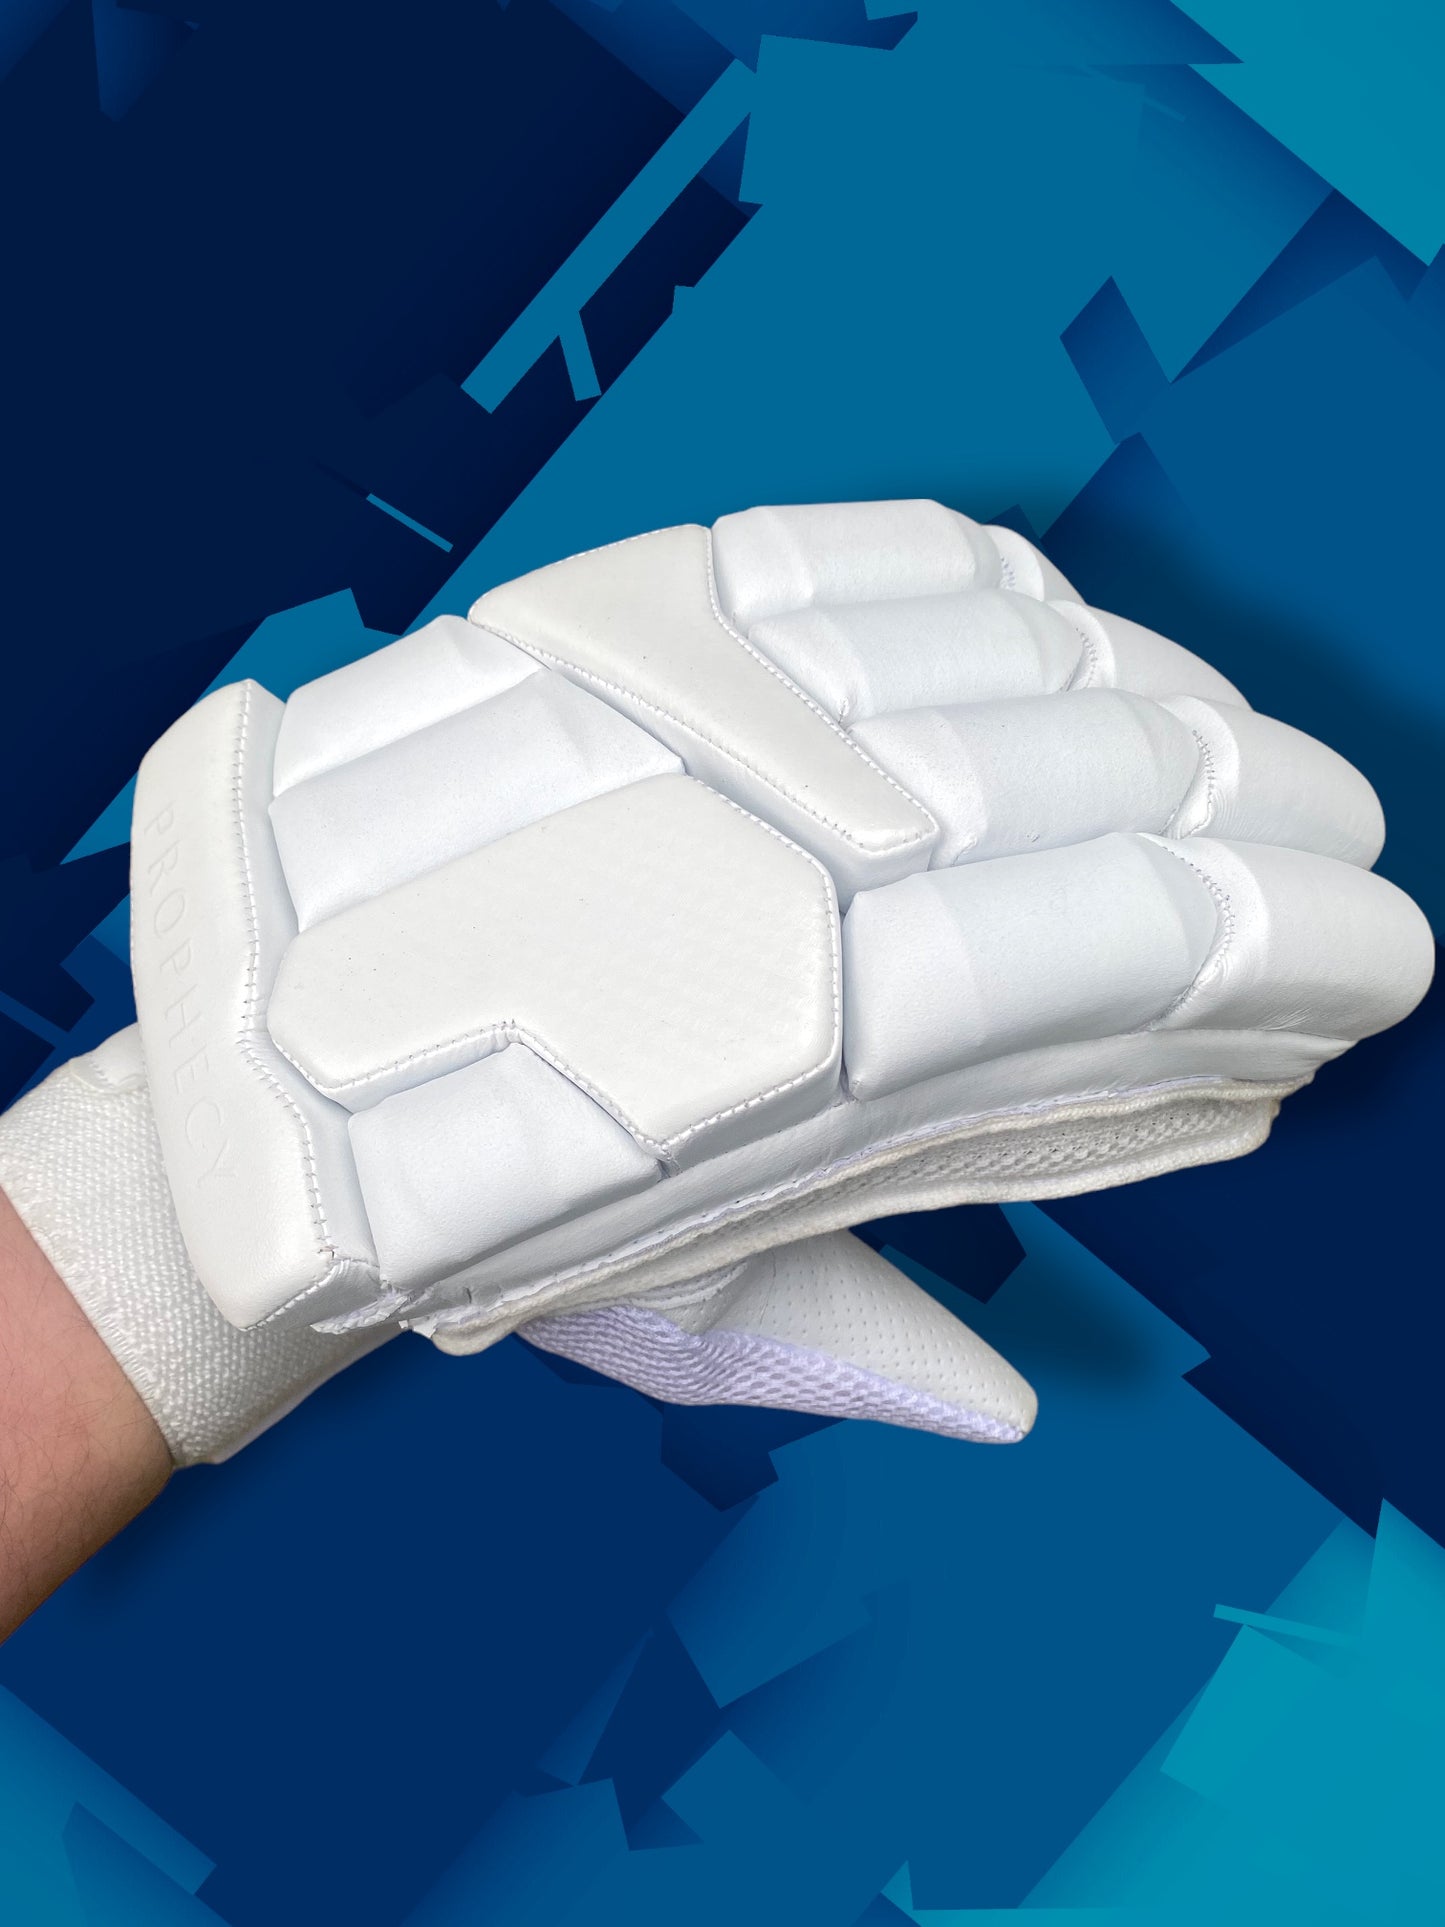 Prophecy Cricket Batting Gloves